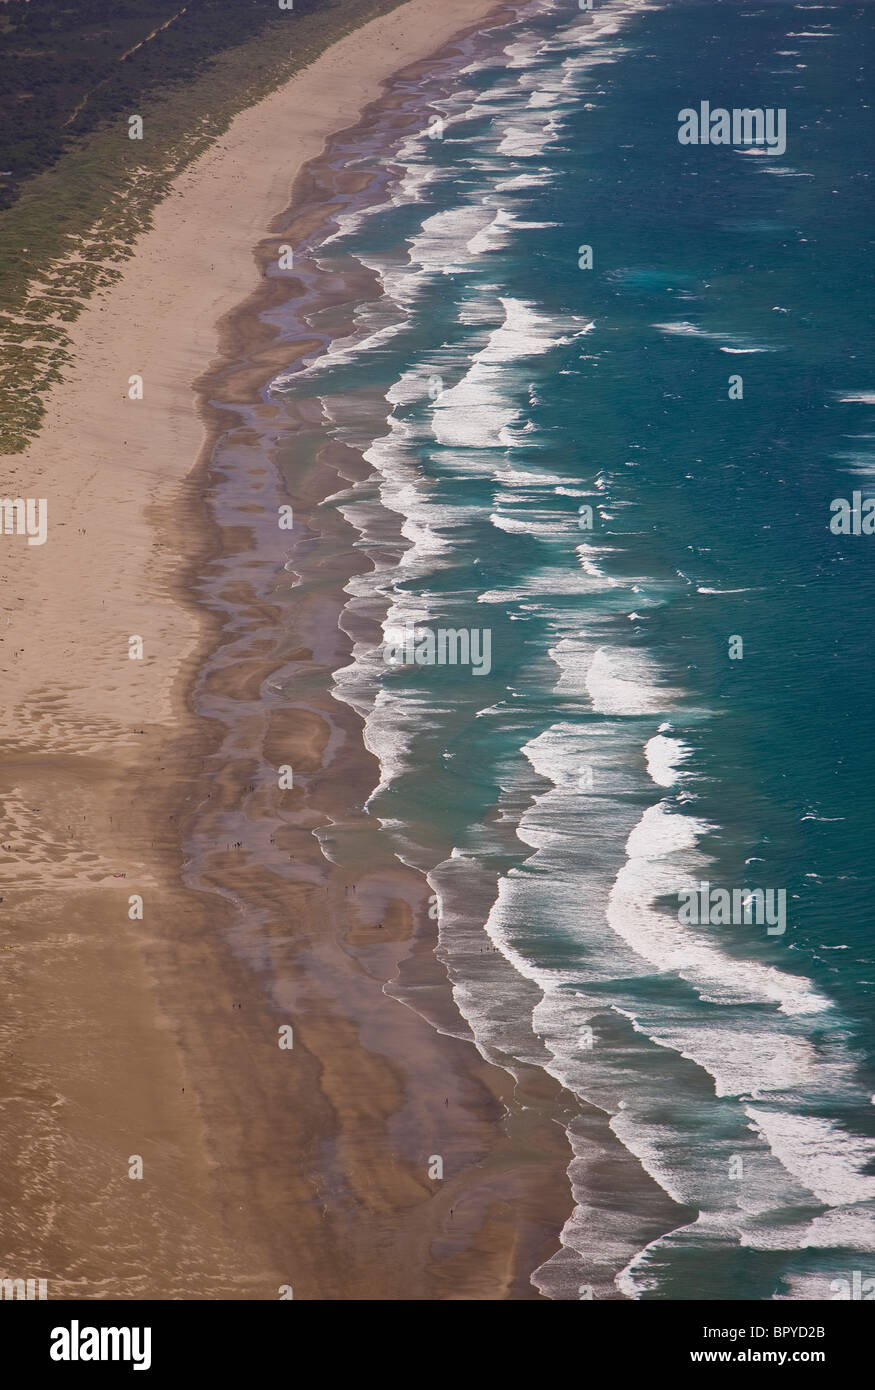 MANZANITA, OREGON, USA - Manzanita Beach and Pacific Ocean surf on Oregon coast. Stock Photo